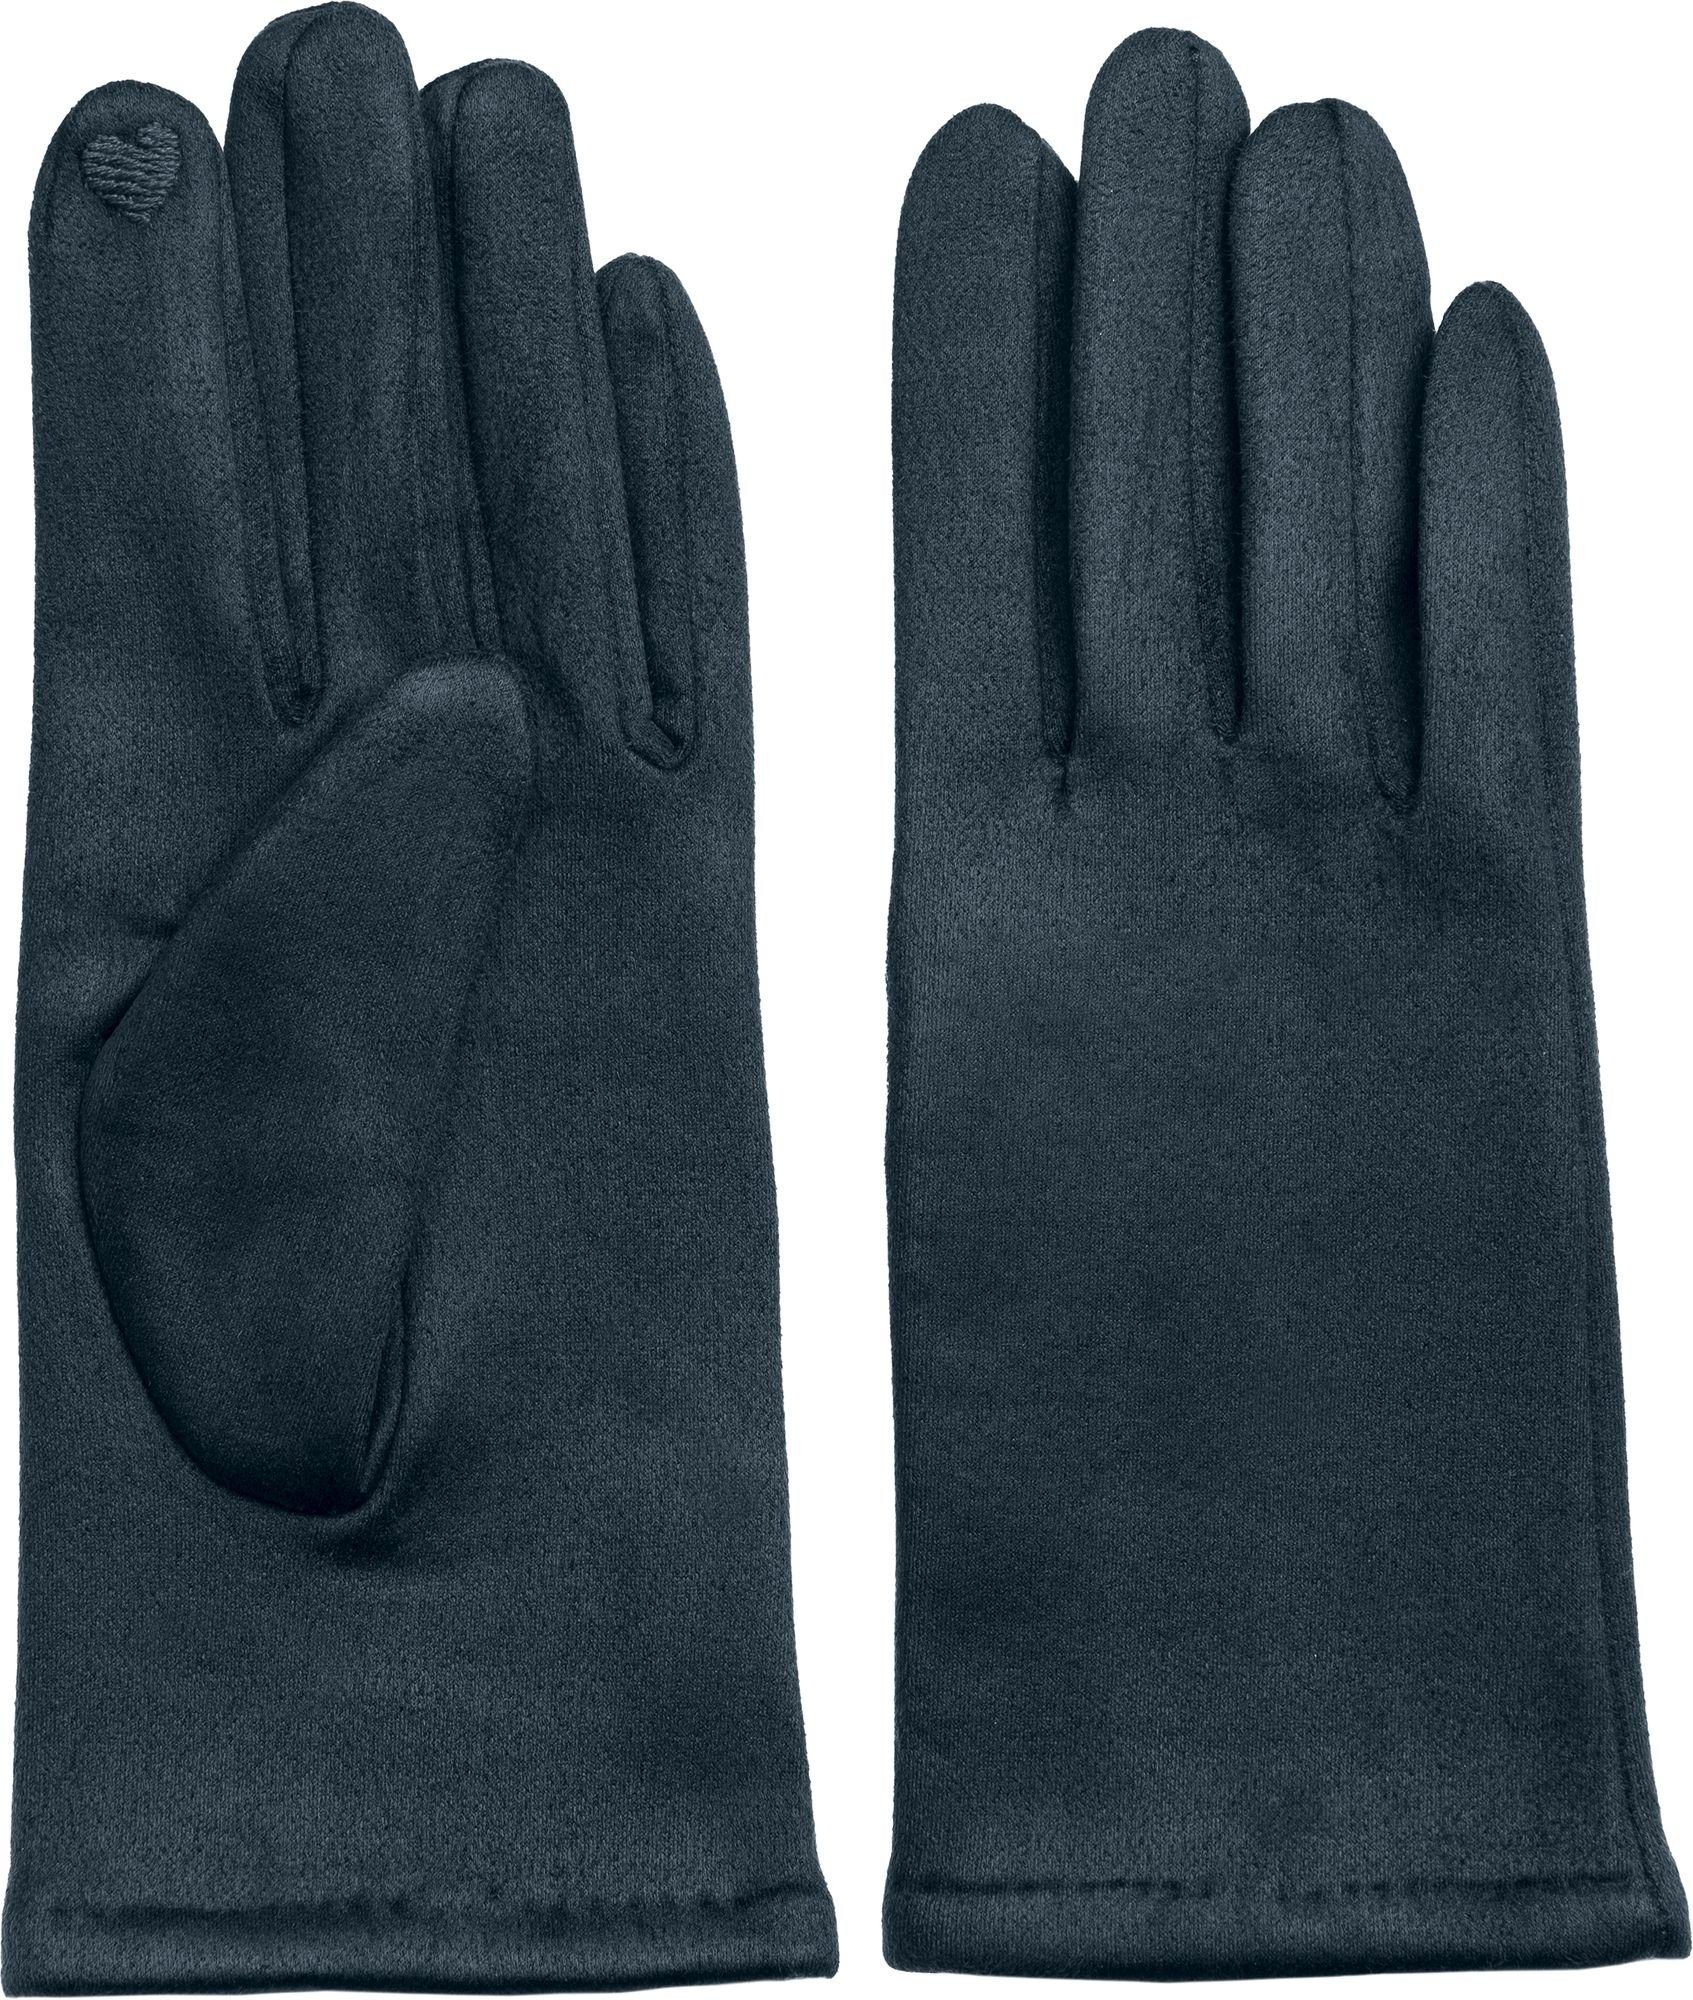 Caspar Strickhandschuhe GLV013 klassisch elegante uni Damen Winter Handschuhe dunkelblau